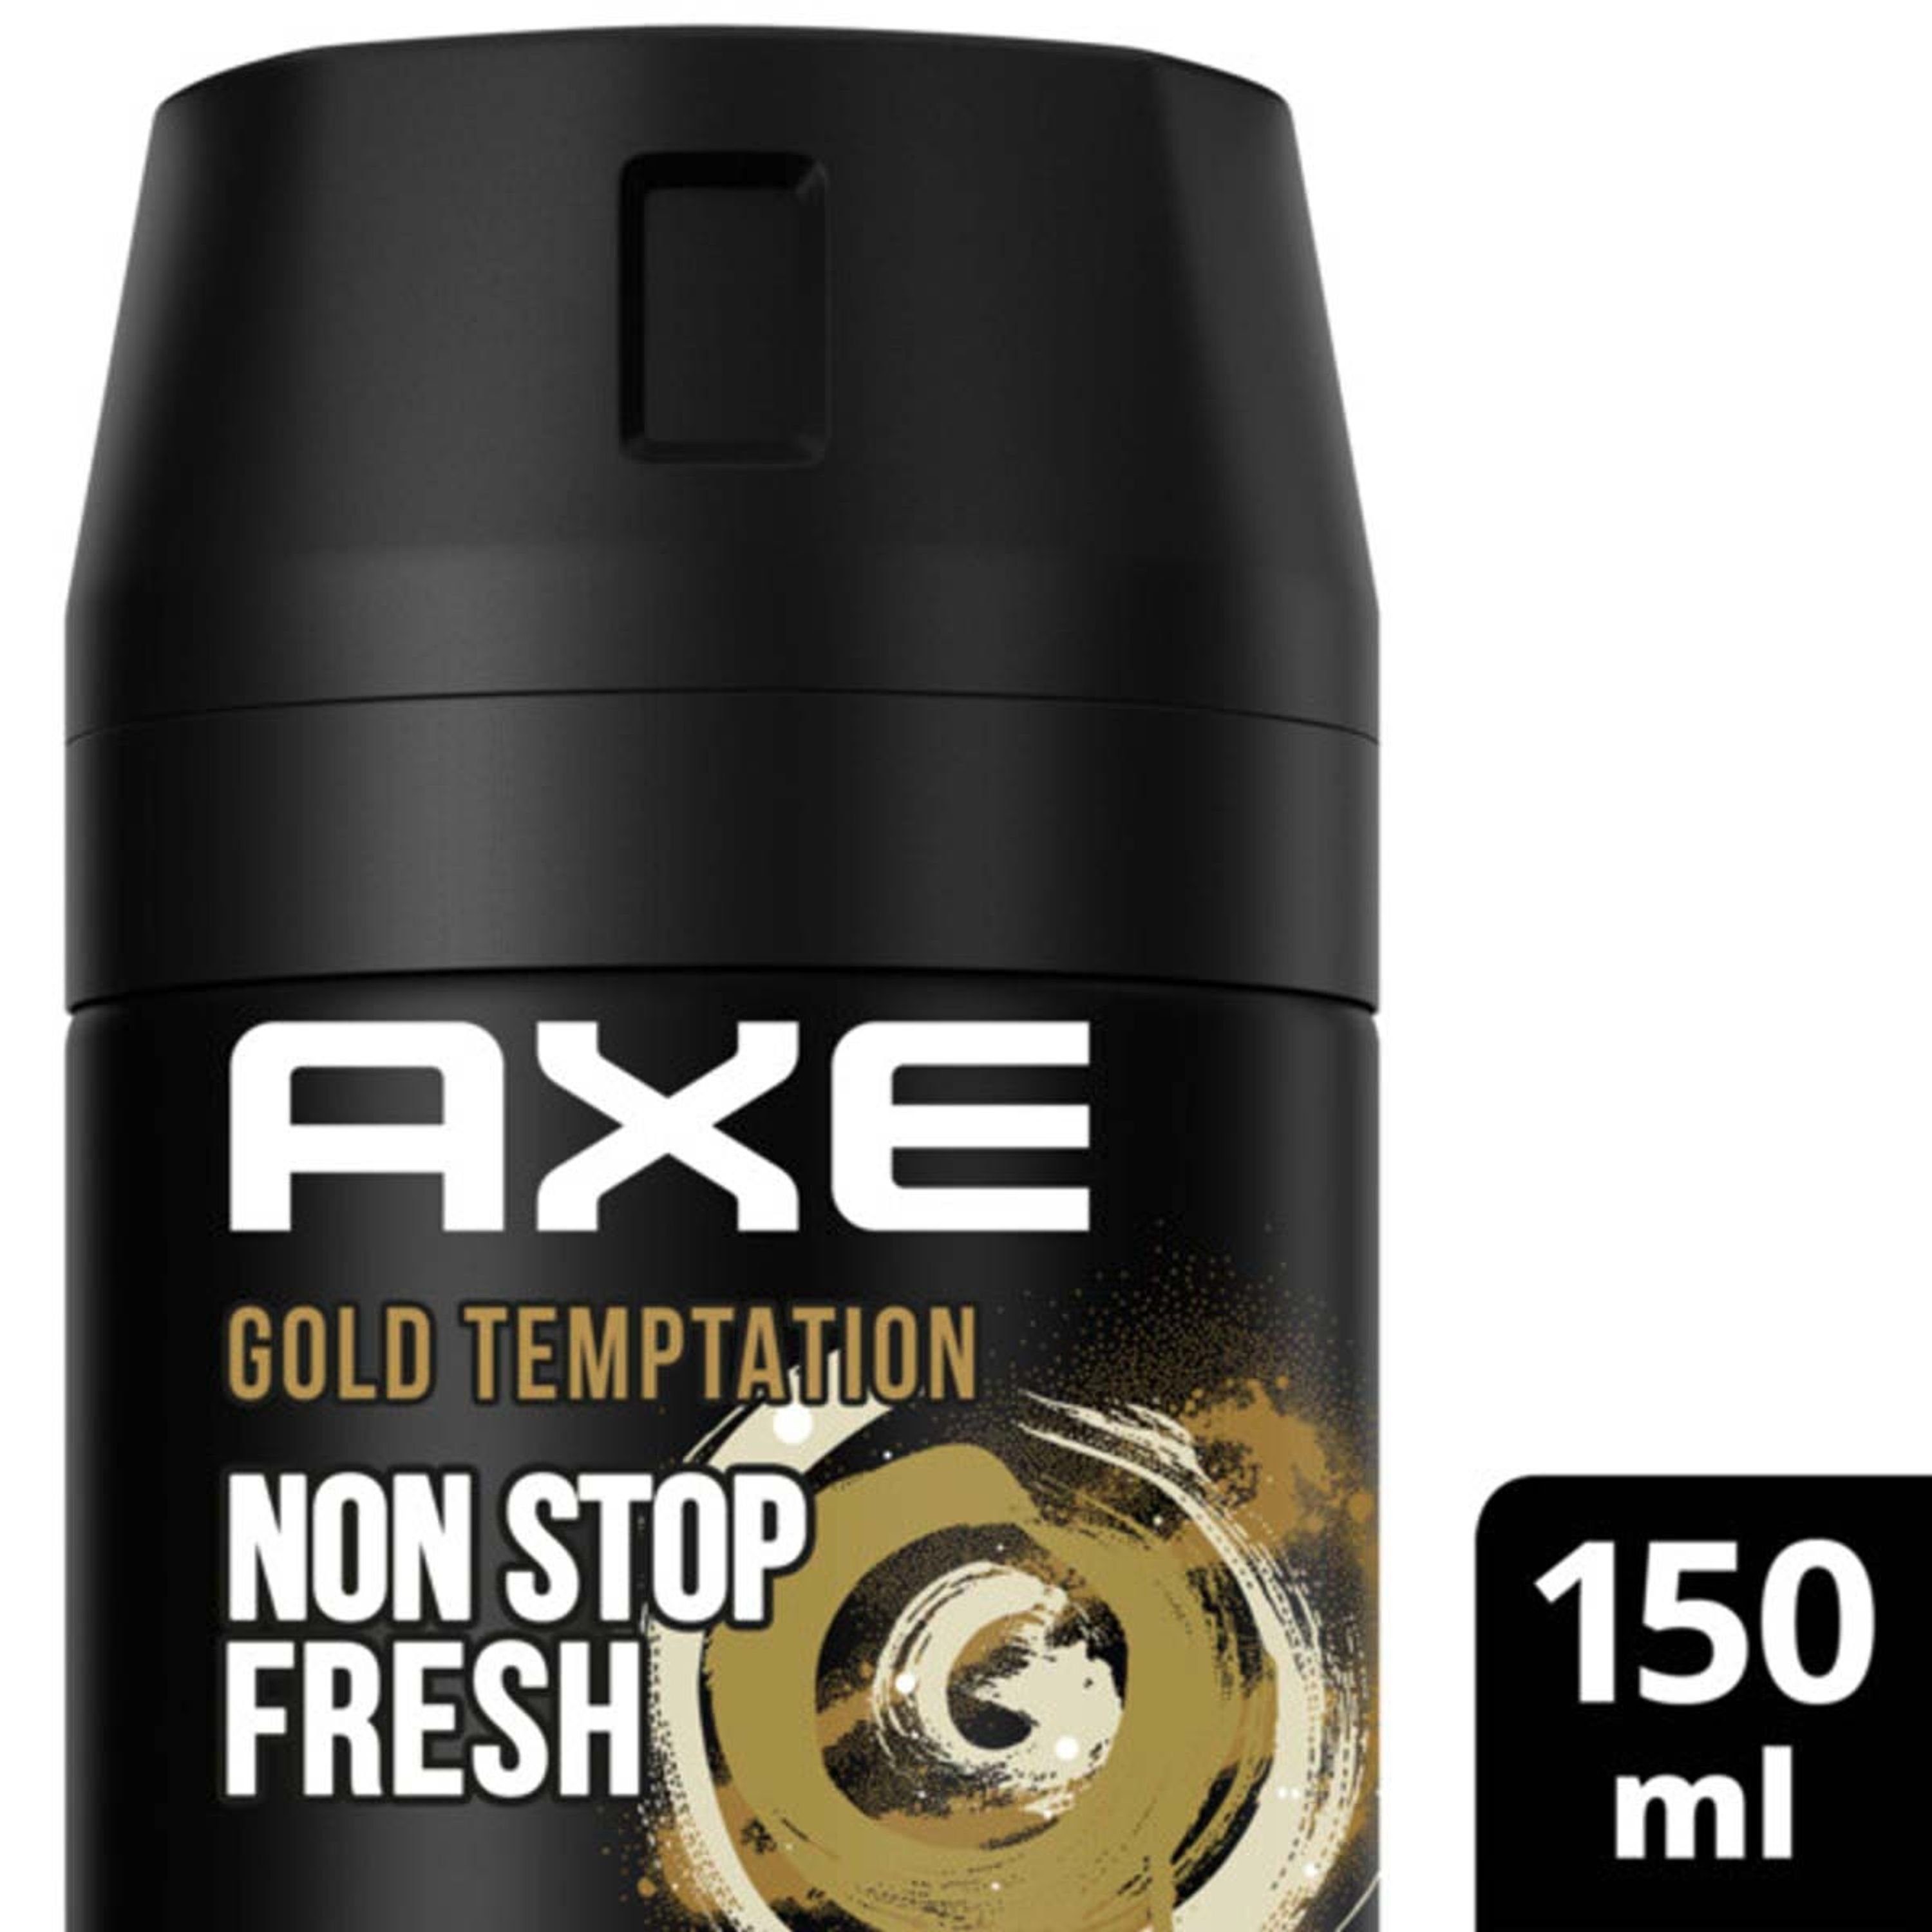 Deodorant 150ml Bodyspray Temptation Deospray axe Aluminium 6x ohne Gold Deo-Set